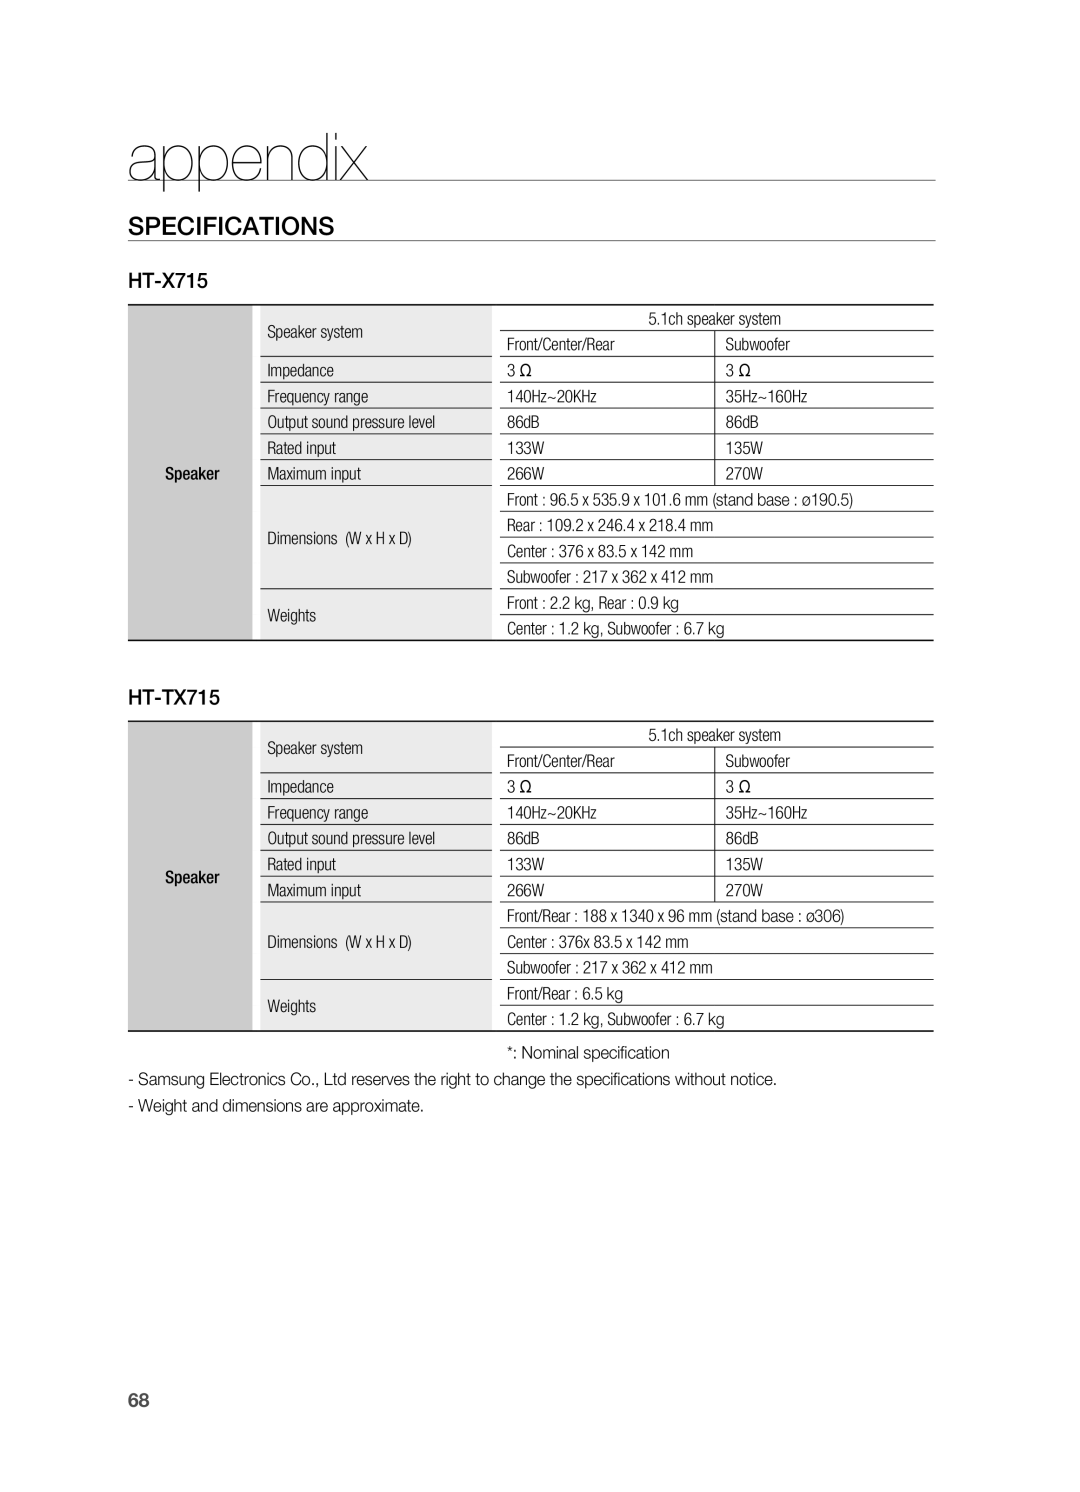 Samsung HT-TX715 user manual appendix, Specifications, HT-X715, Speaker 